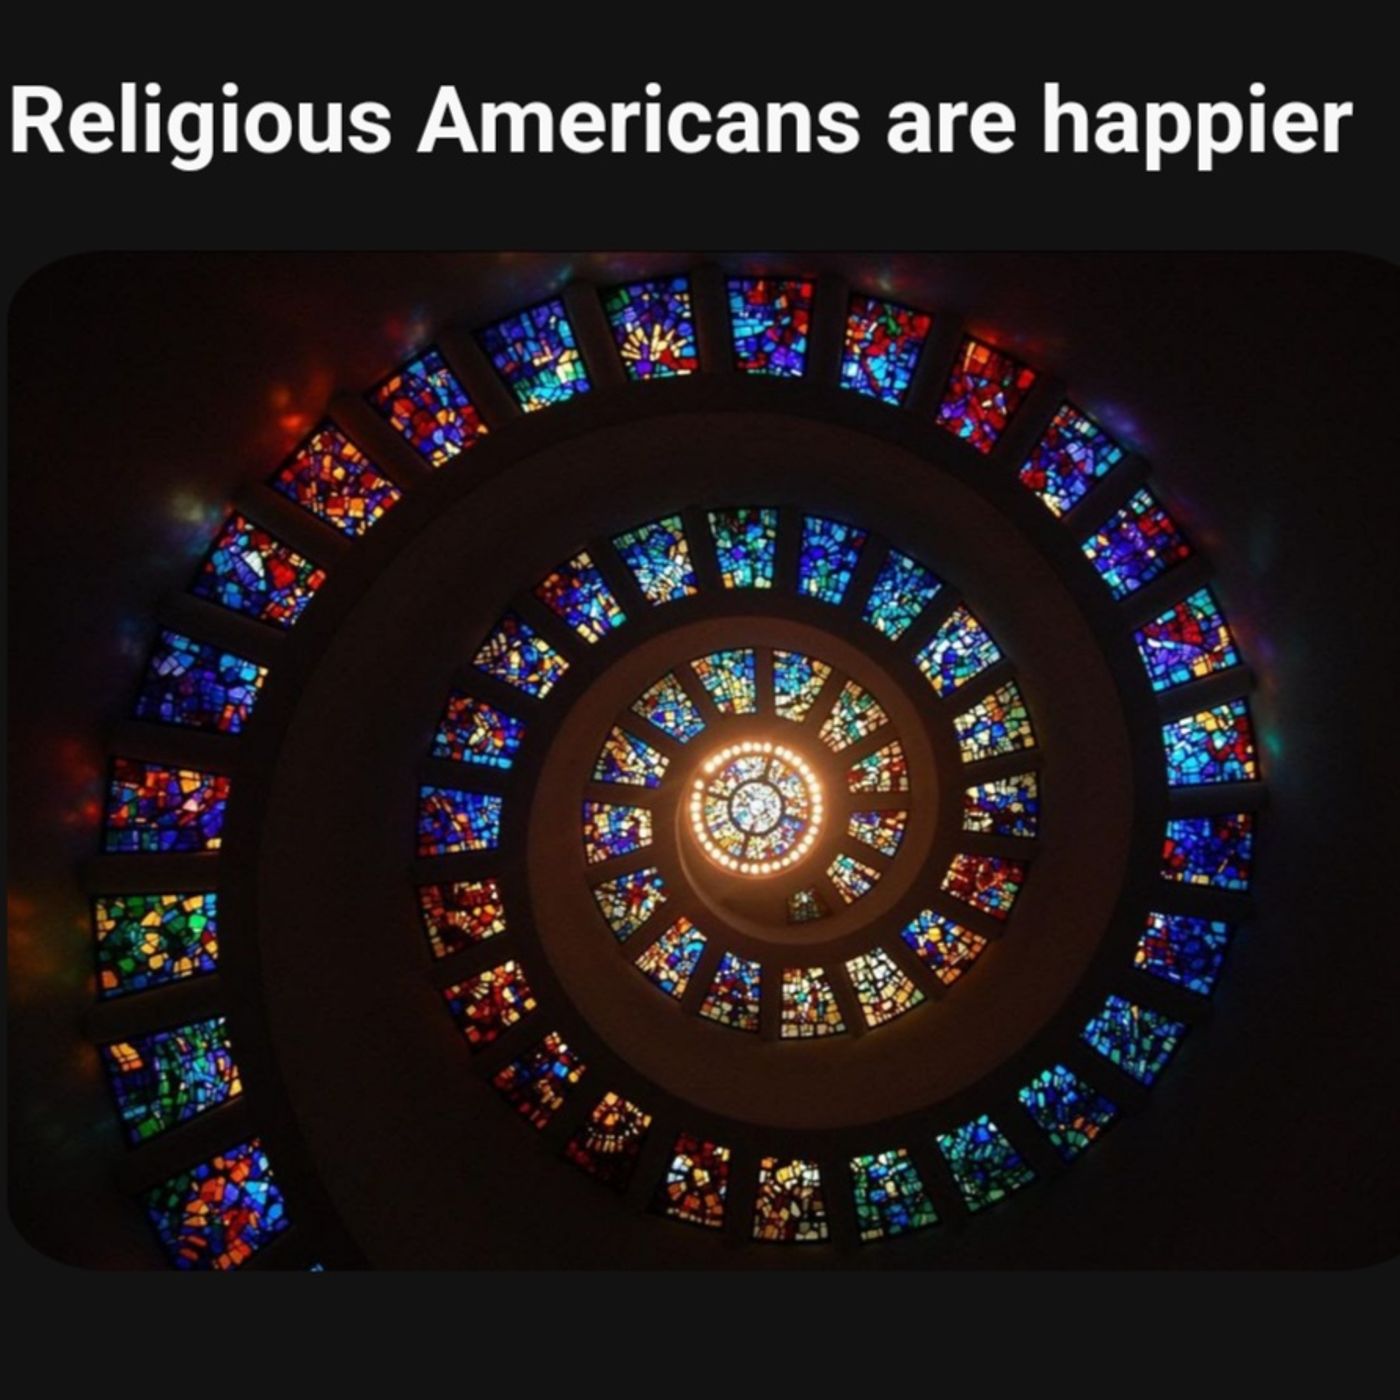 Religious Americans are happier